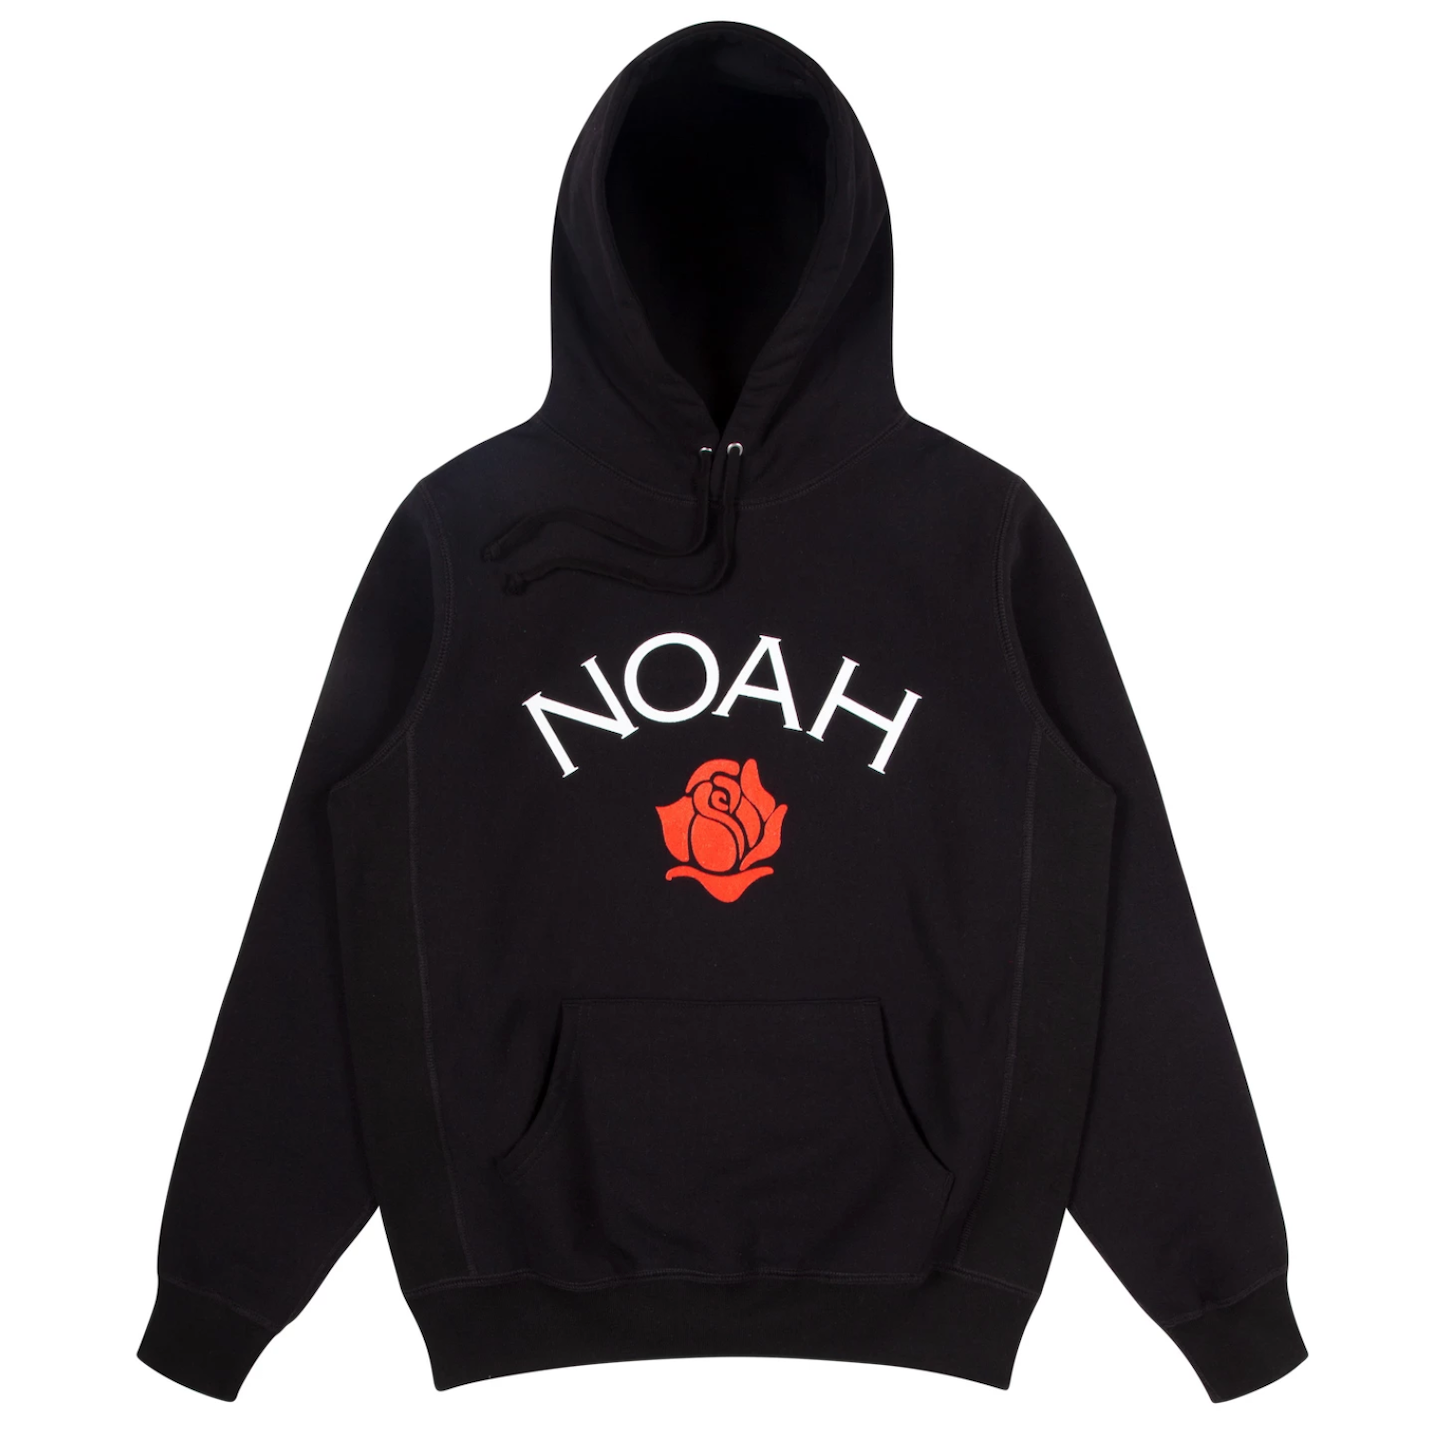 Noah NY Rose Logo Hoodie - Black